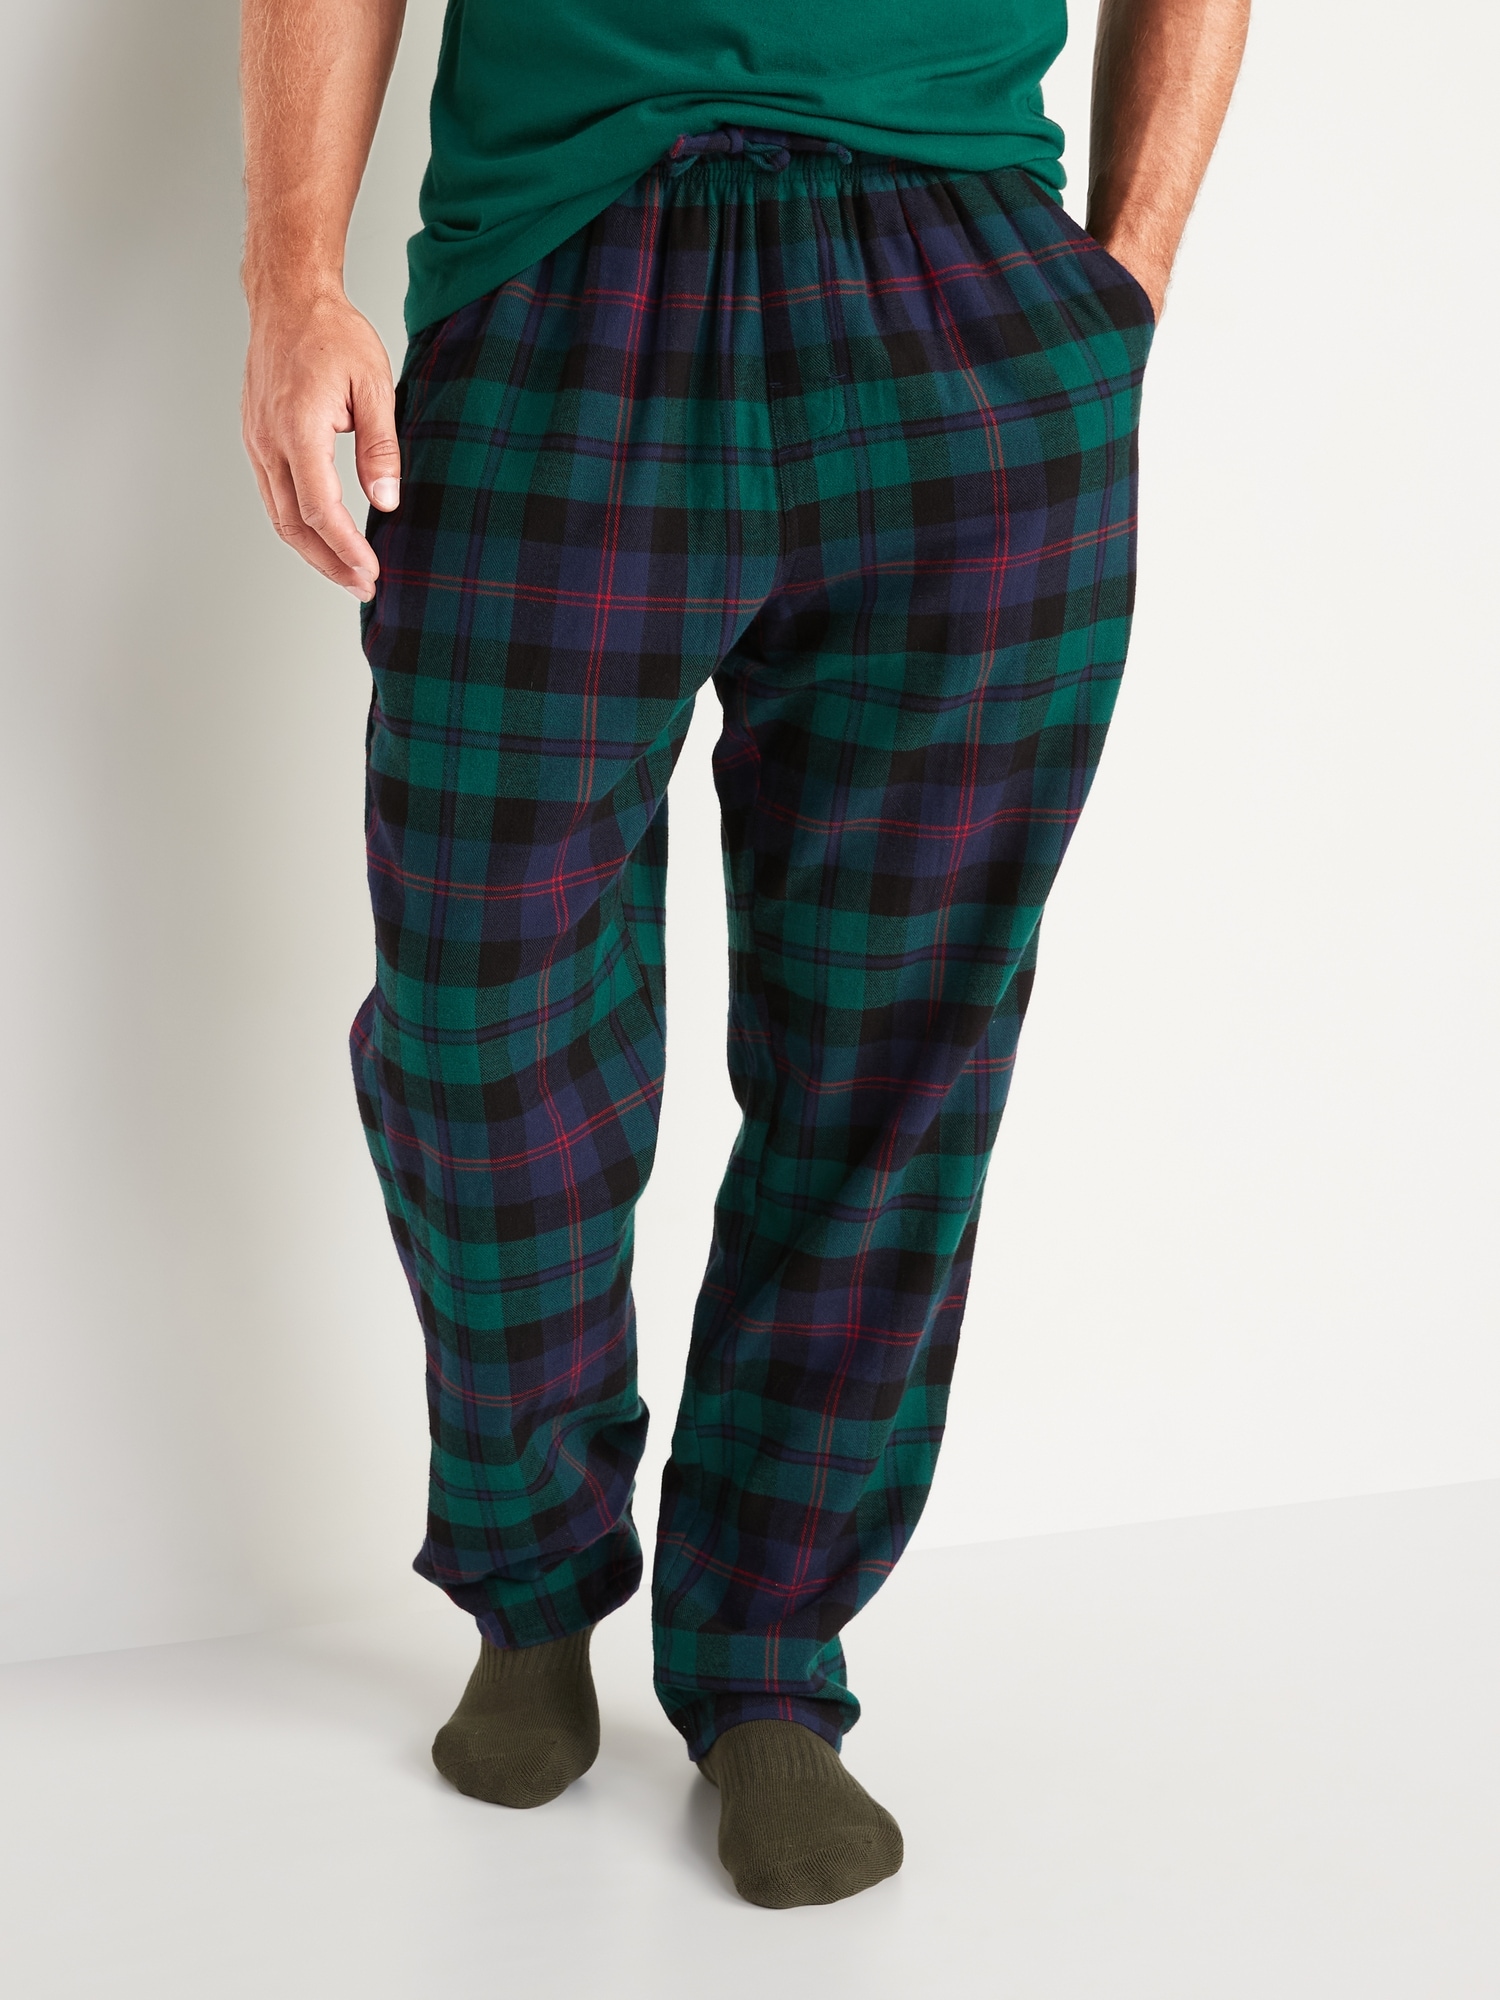 Bottoms O.U.T. mens plaid pajama pants, red/black size Large (L) 32 waist